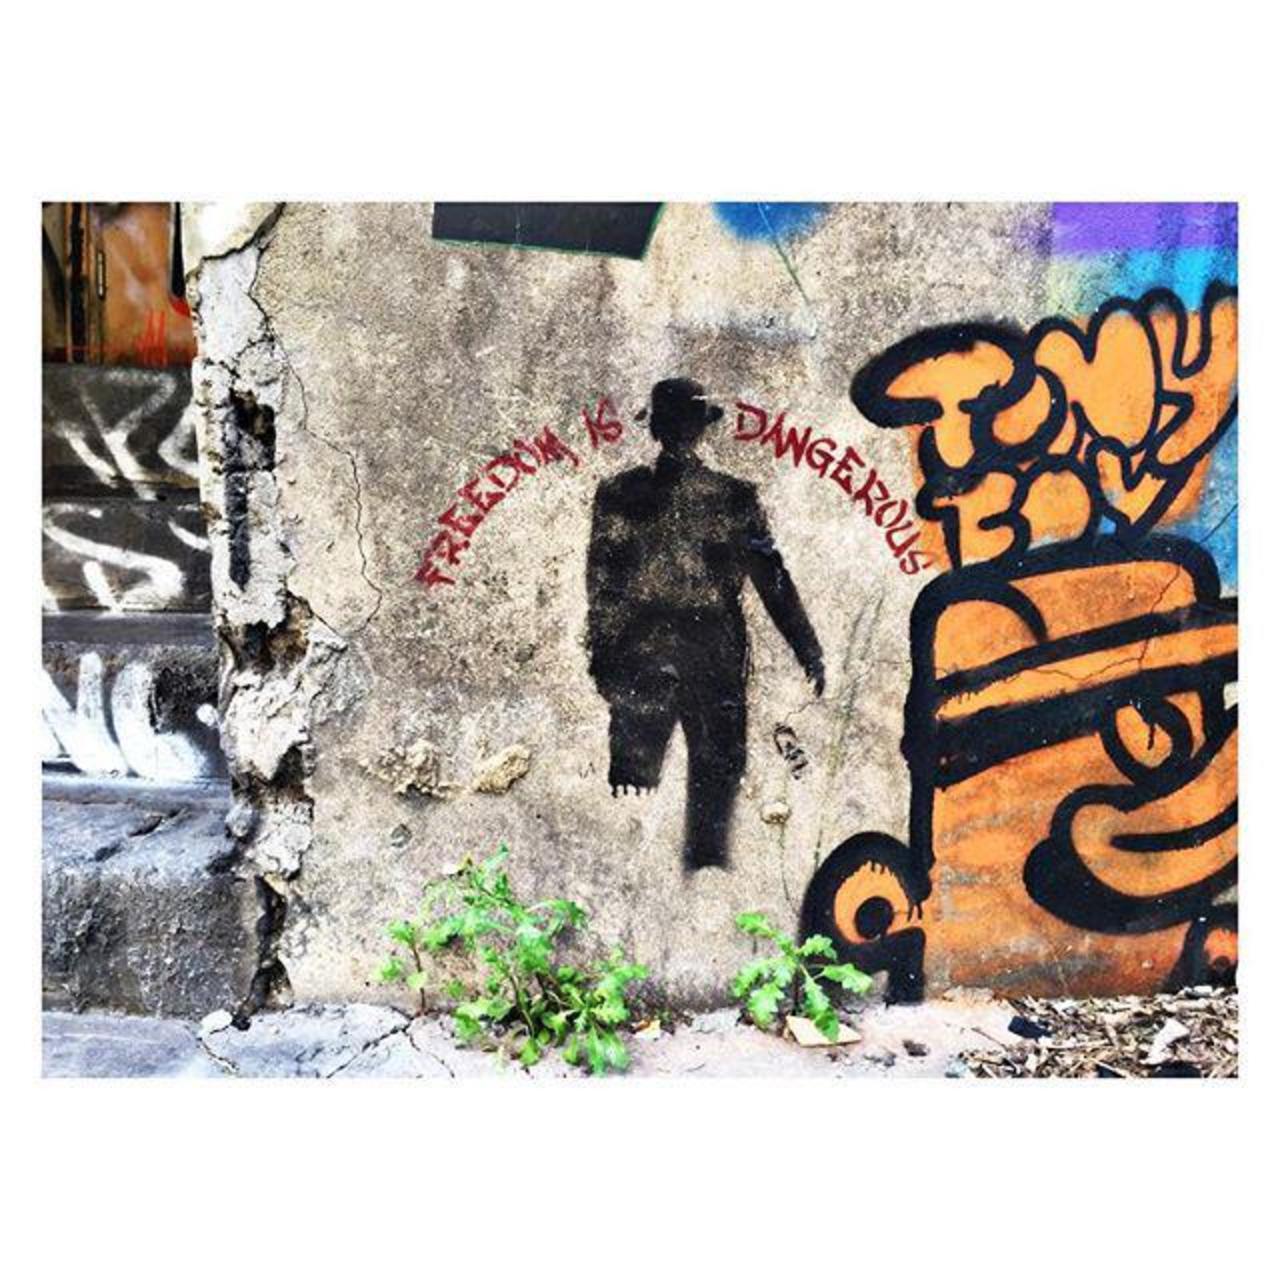 Extremely nowadays #streetart #graffiti #freedom #stencil #paint #art #spraypaint #artist #design #wall #mural #wal… http://t.co/Zu0IgSH9qO